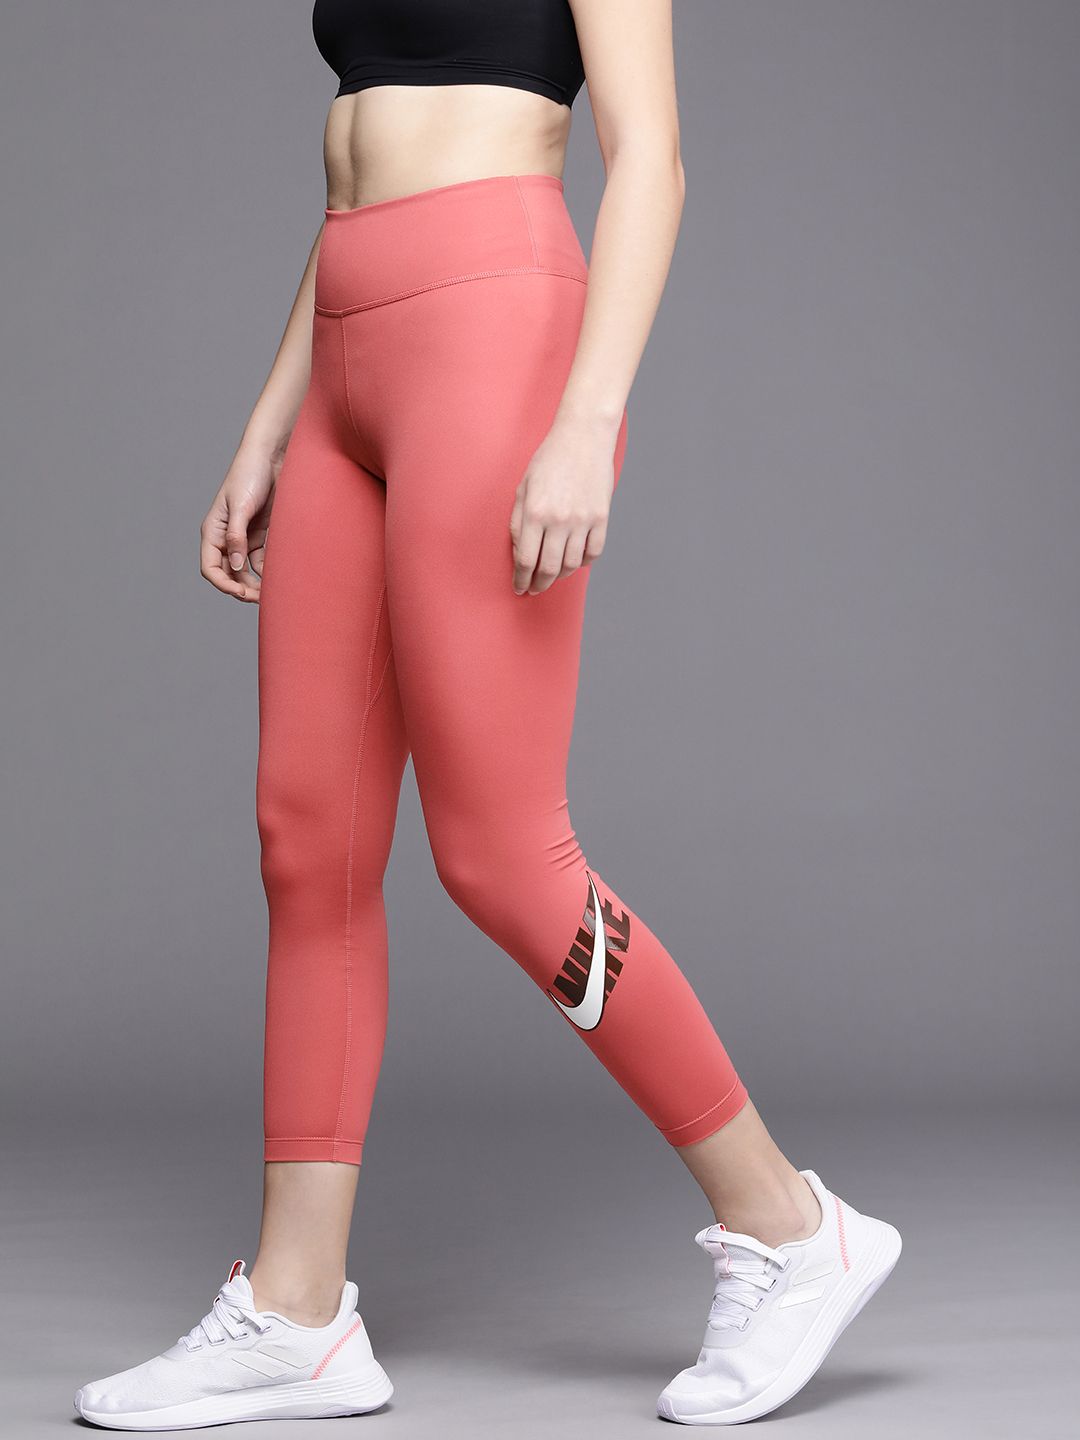 Nike Women Peach-Coloured Graphic One Icon Clash Mid-Rise 7/8 Dri-FIT Training Tights Price in India